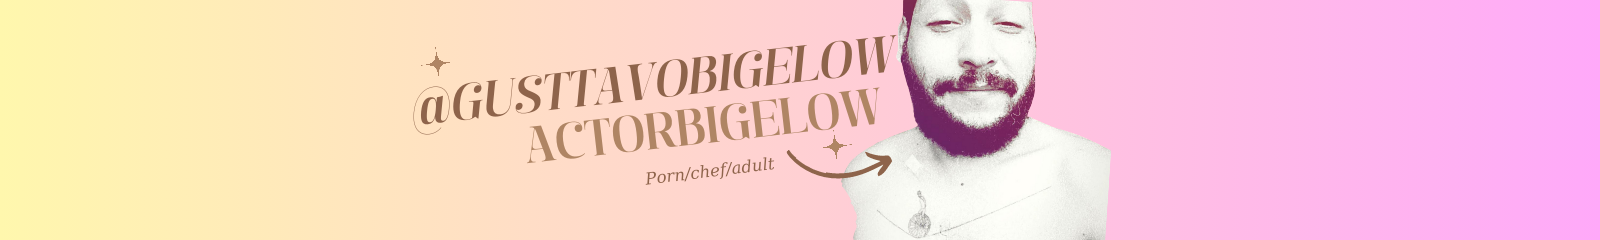 O Bigelow